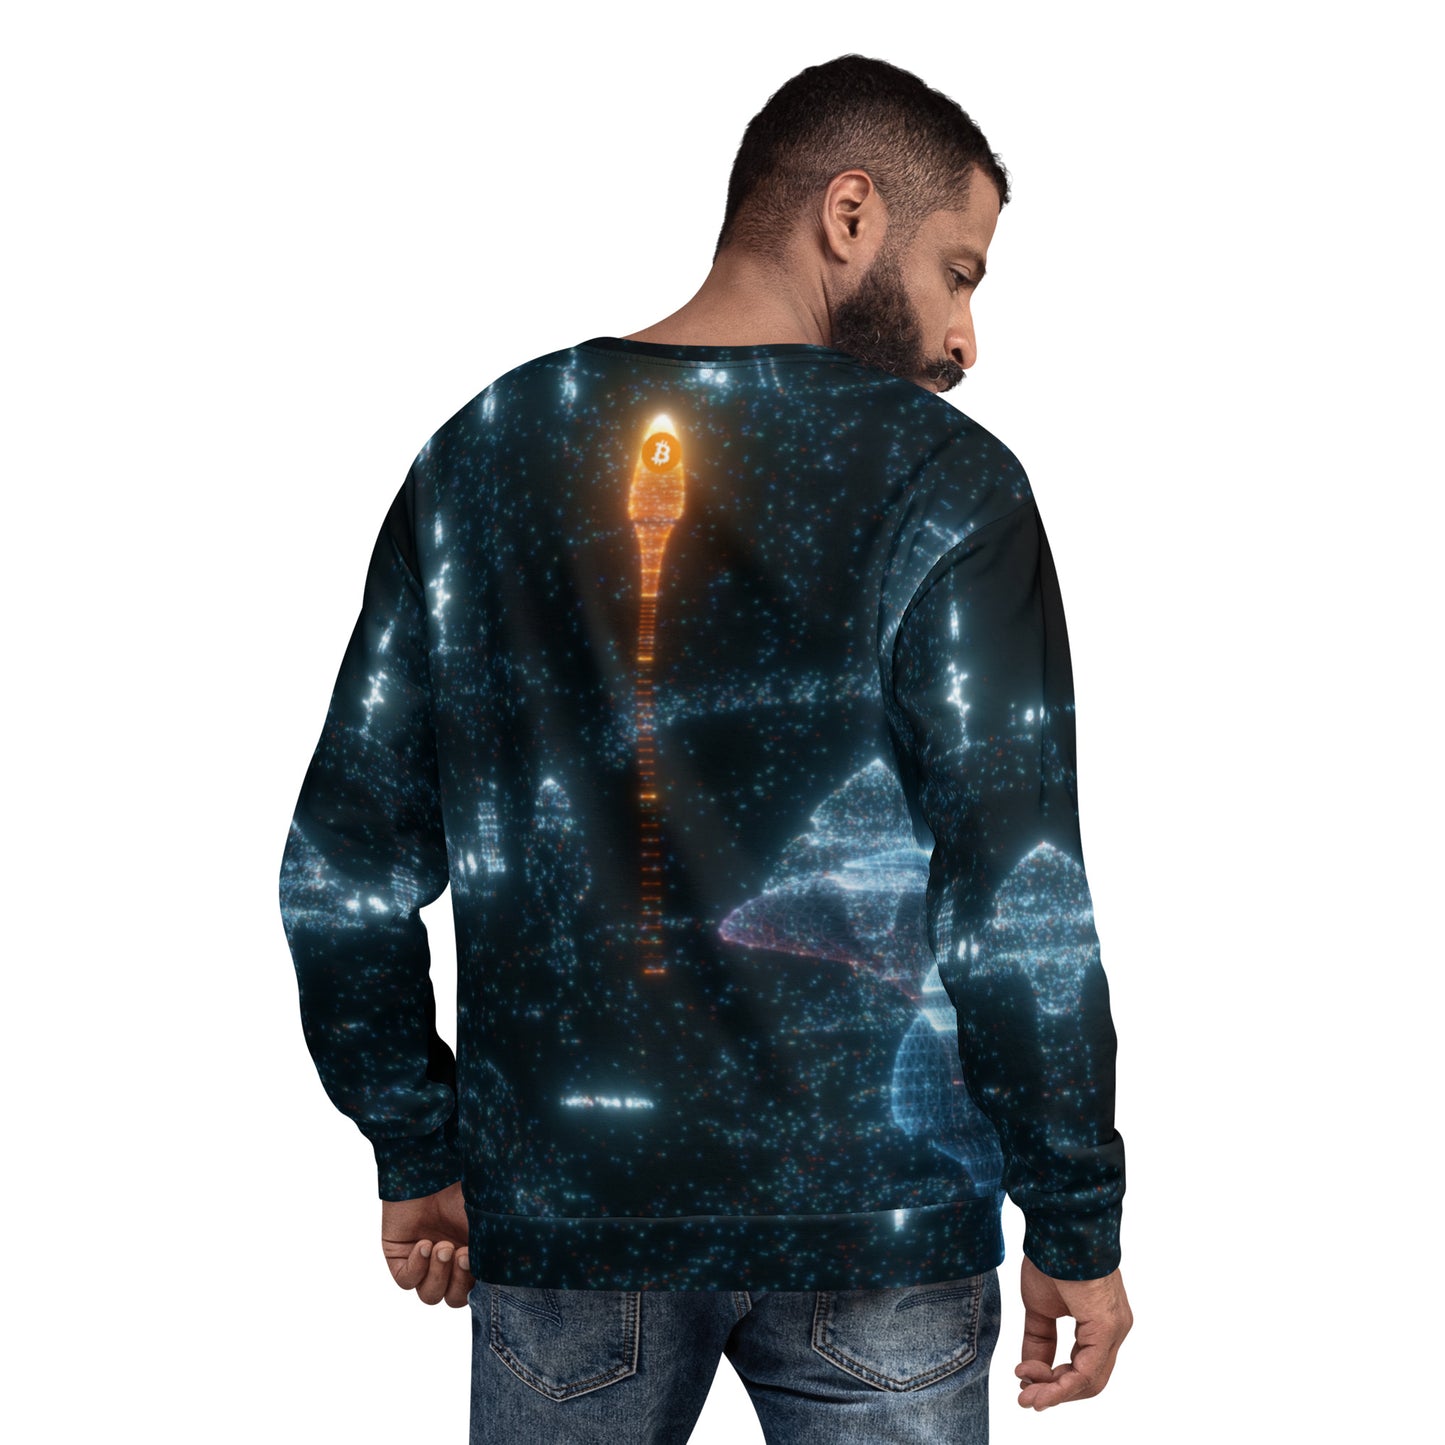 Bitcoin F Space Sweatshirt